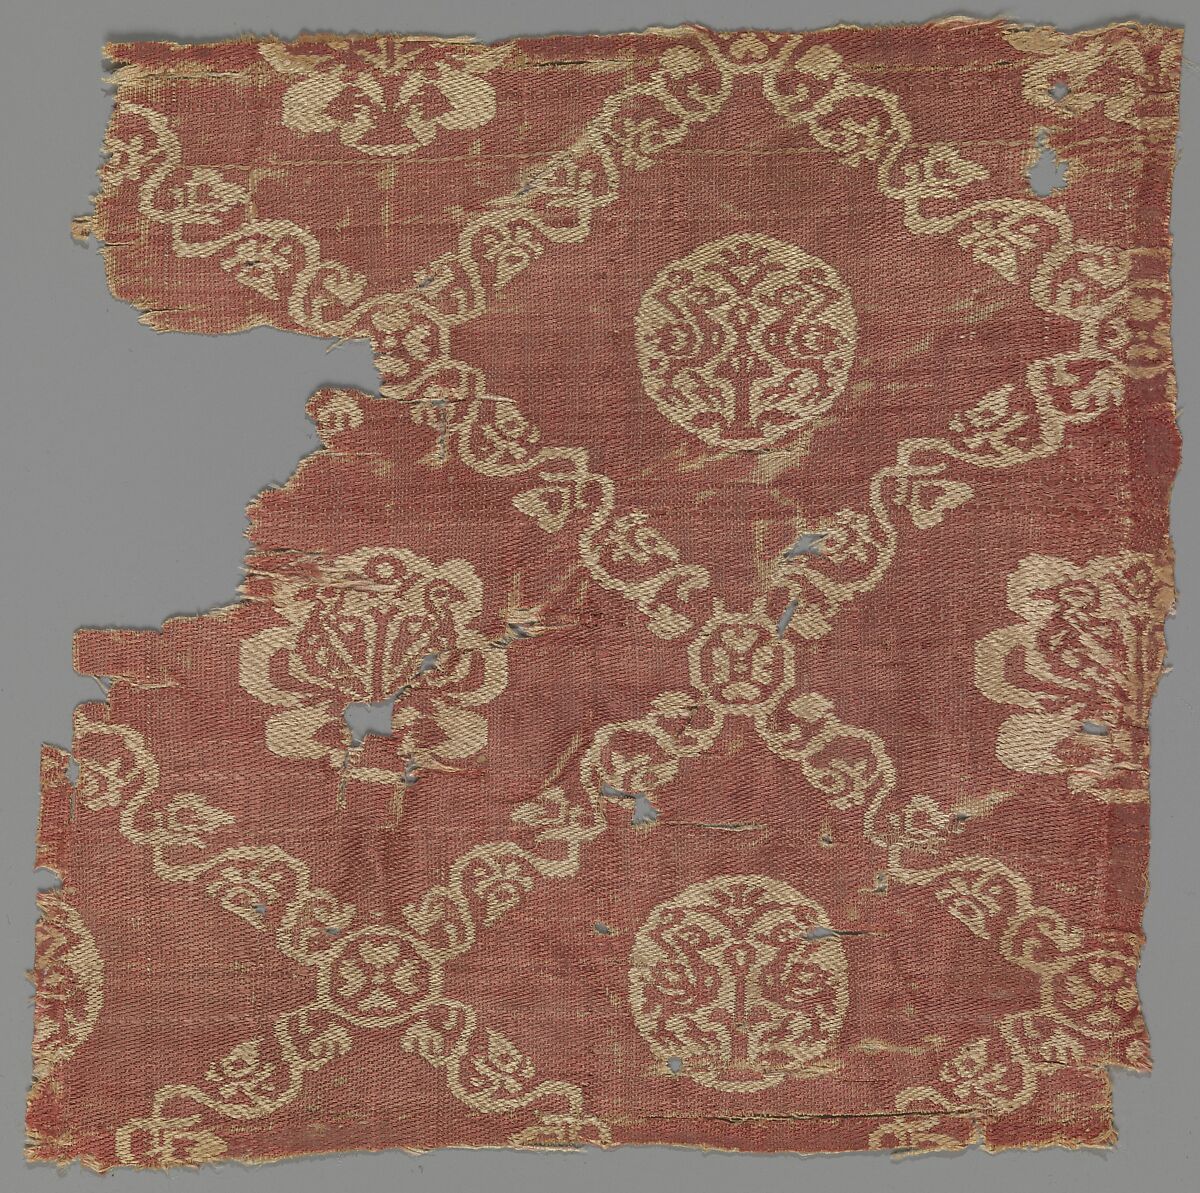 Textile Fragment with Vine Lattice and Birds